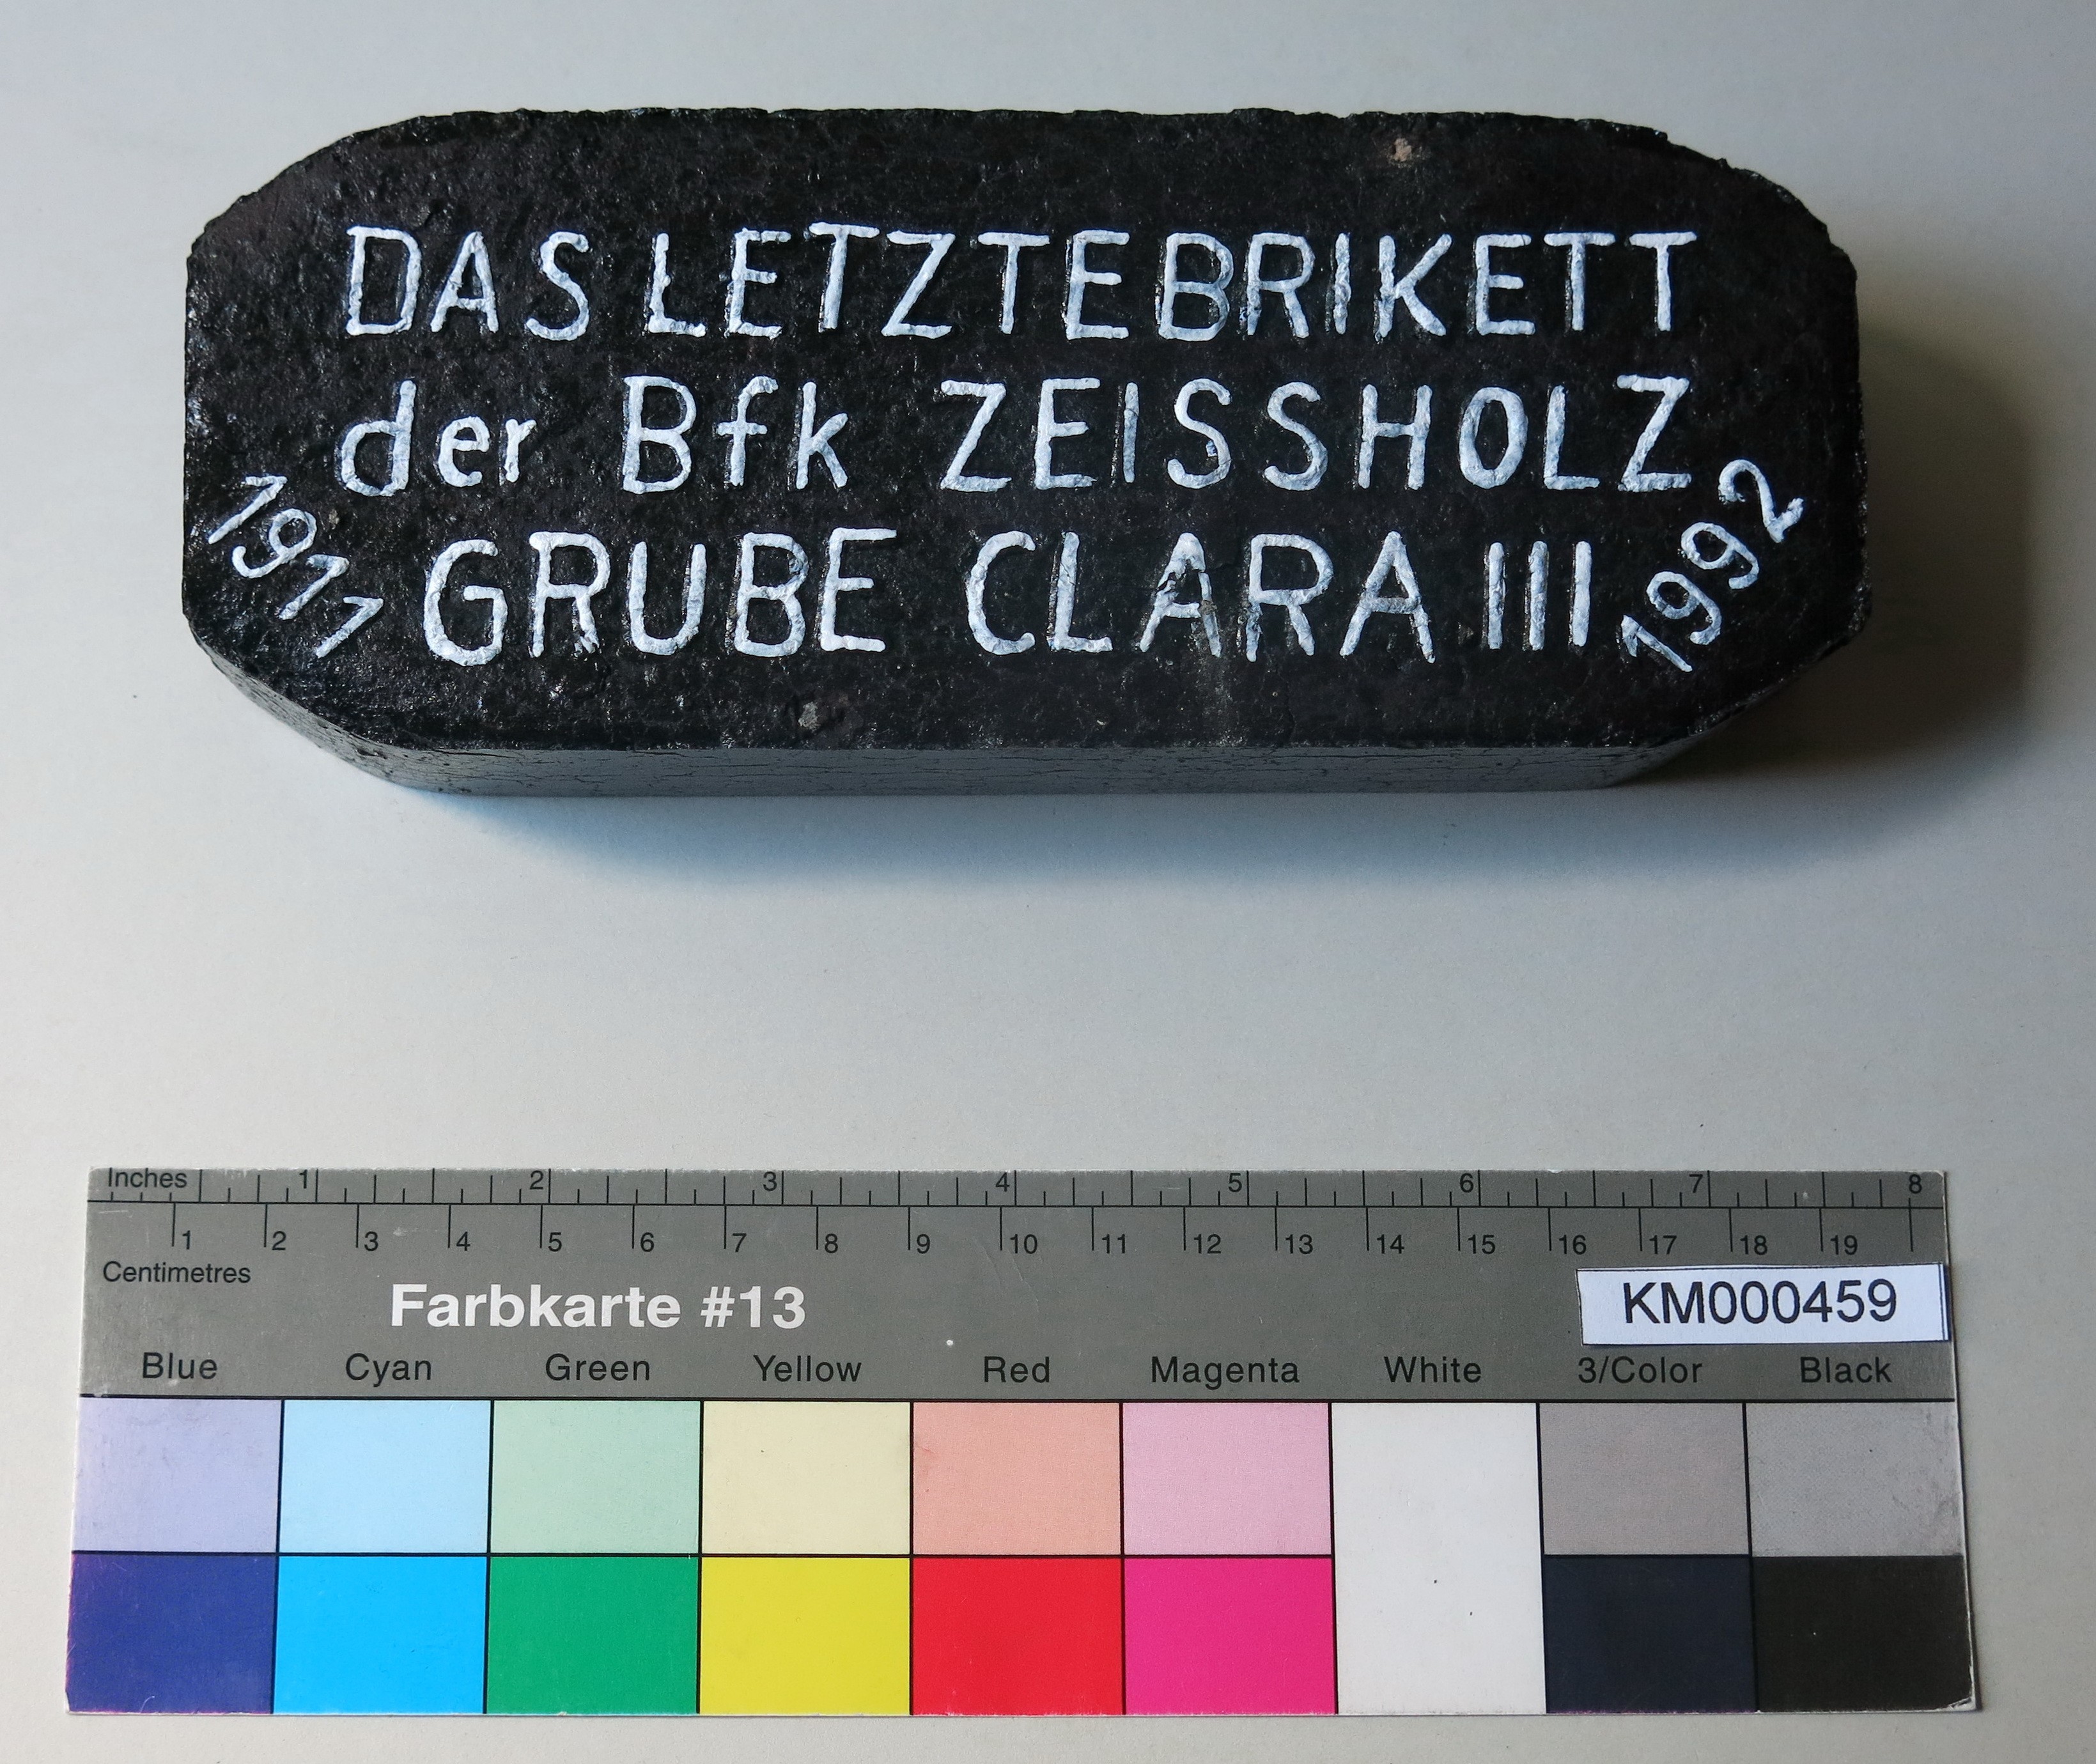 Zierbrikett "DAS LETZTE BRIKETT der Bfk ZEISSHOLZ GRUBE CLARA III 1911 1992" (Energiefabrik Knappenrode CC BY-SA)